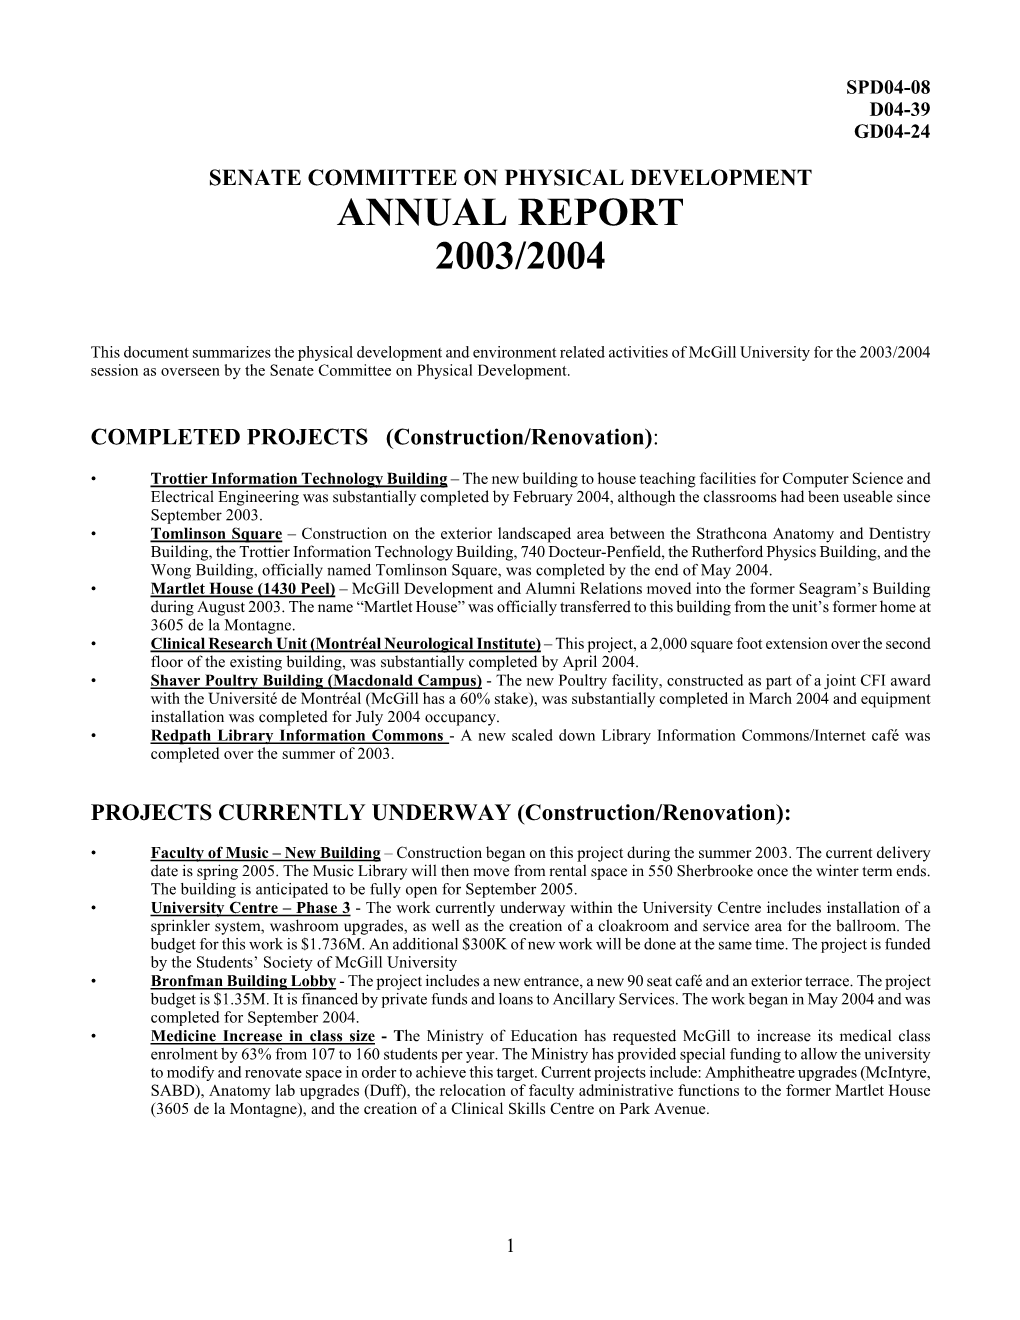 Annual Report 2003/2004